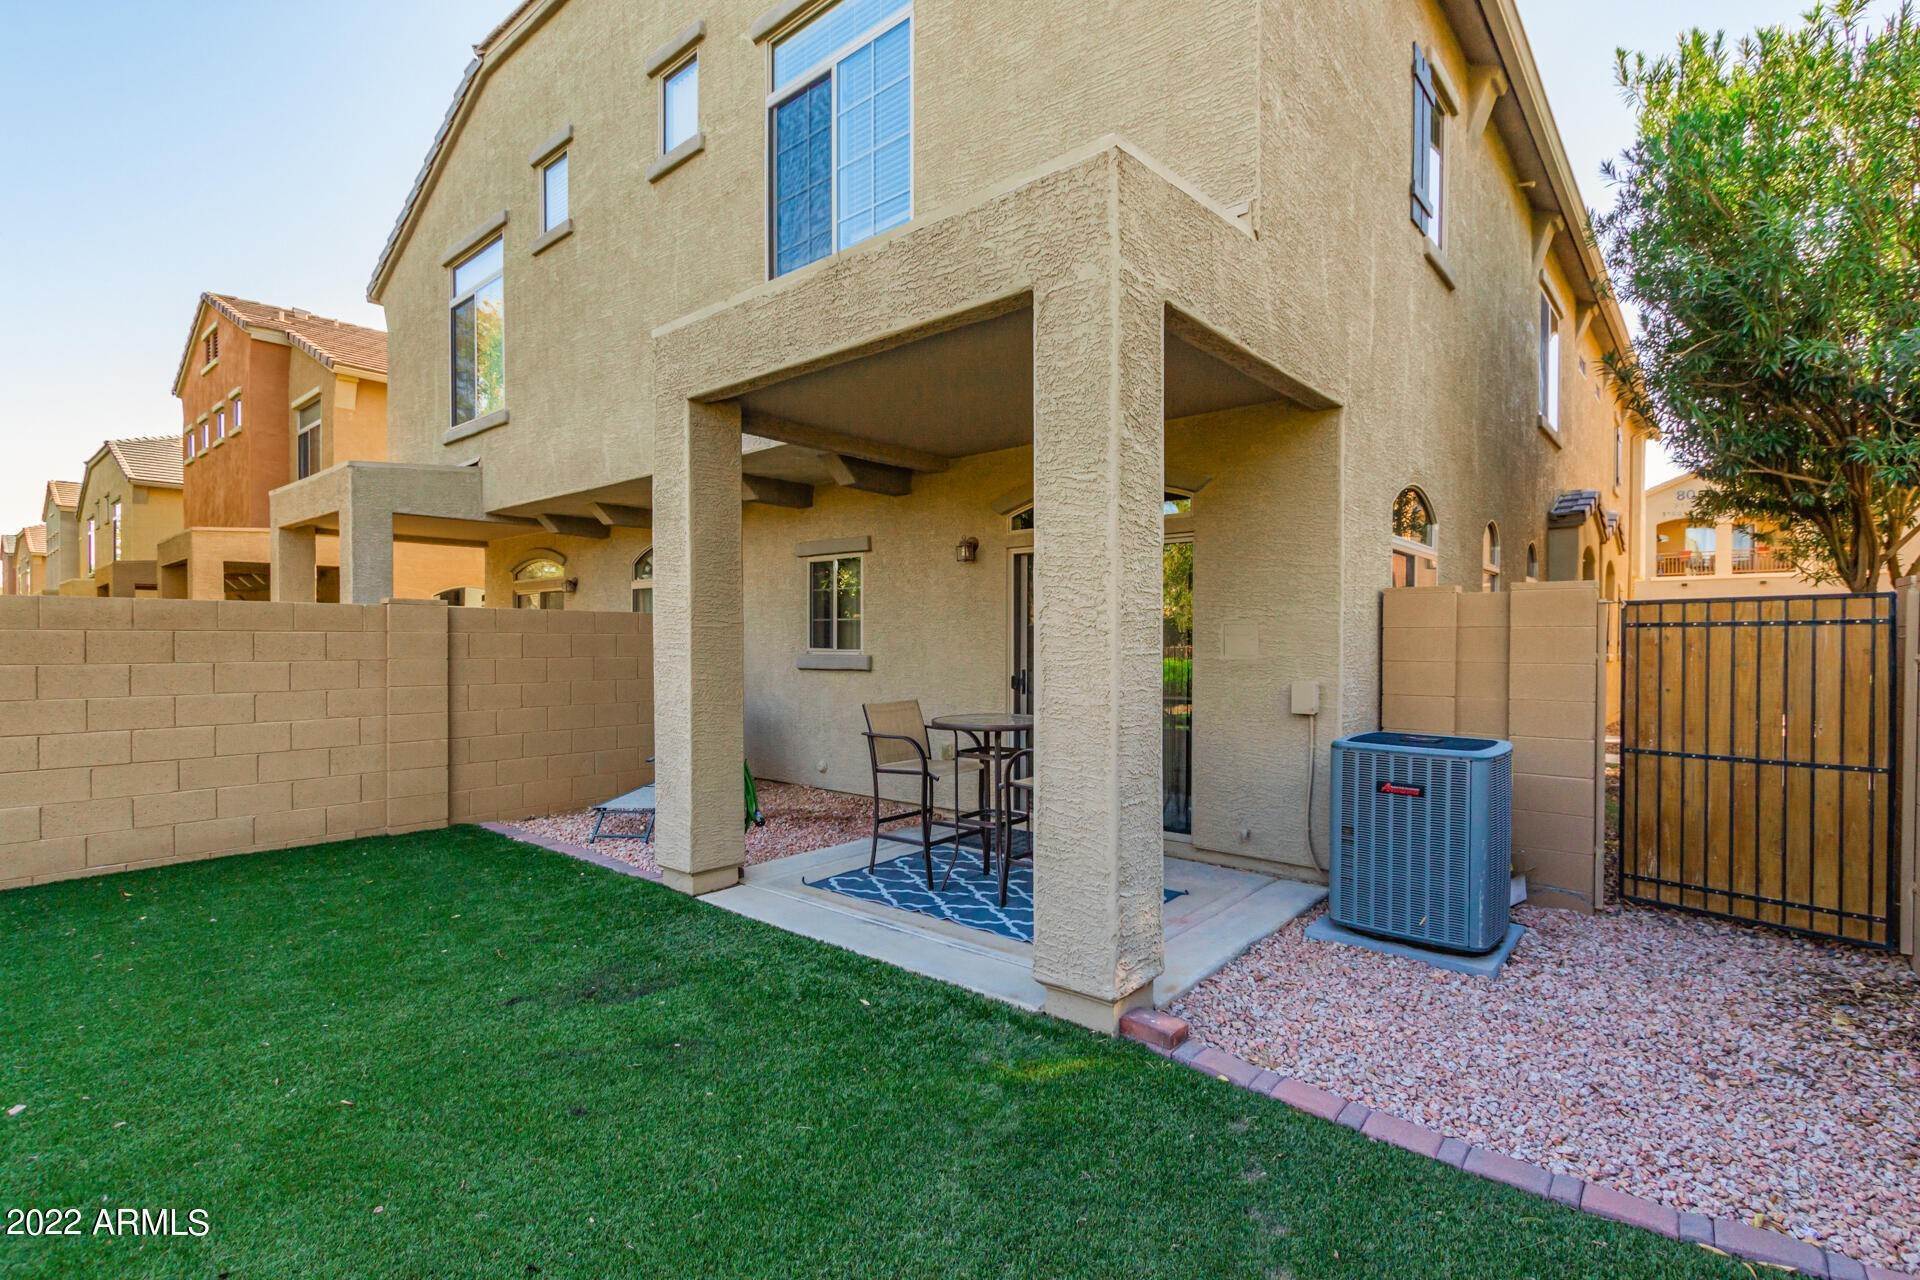 4. Apartment for Sale at Mesa, AZ 85206